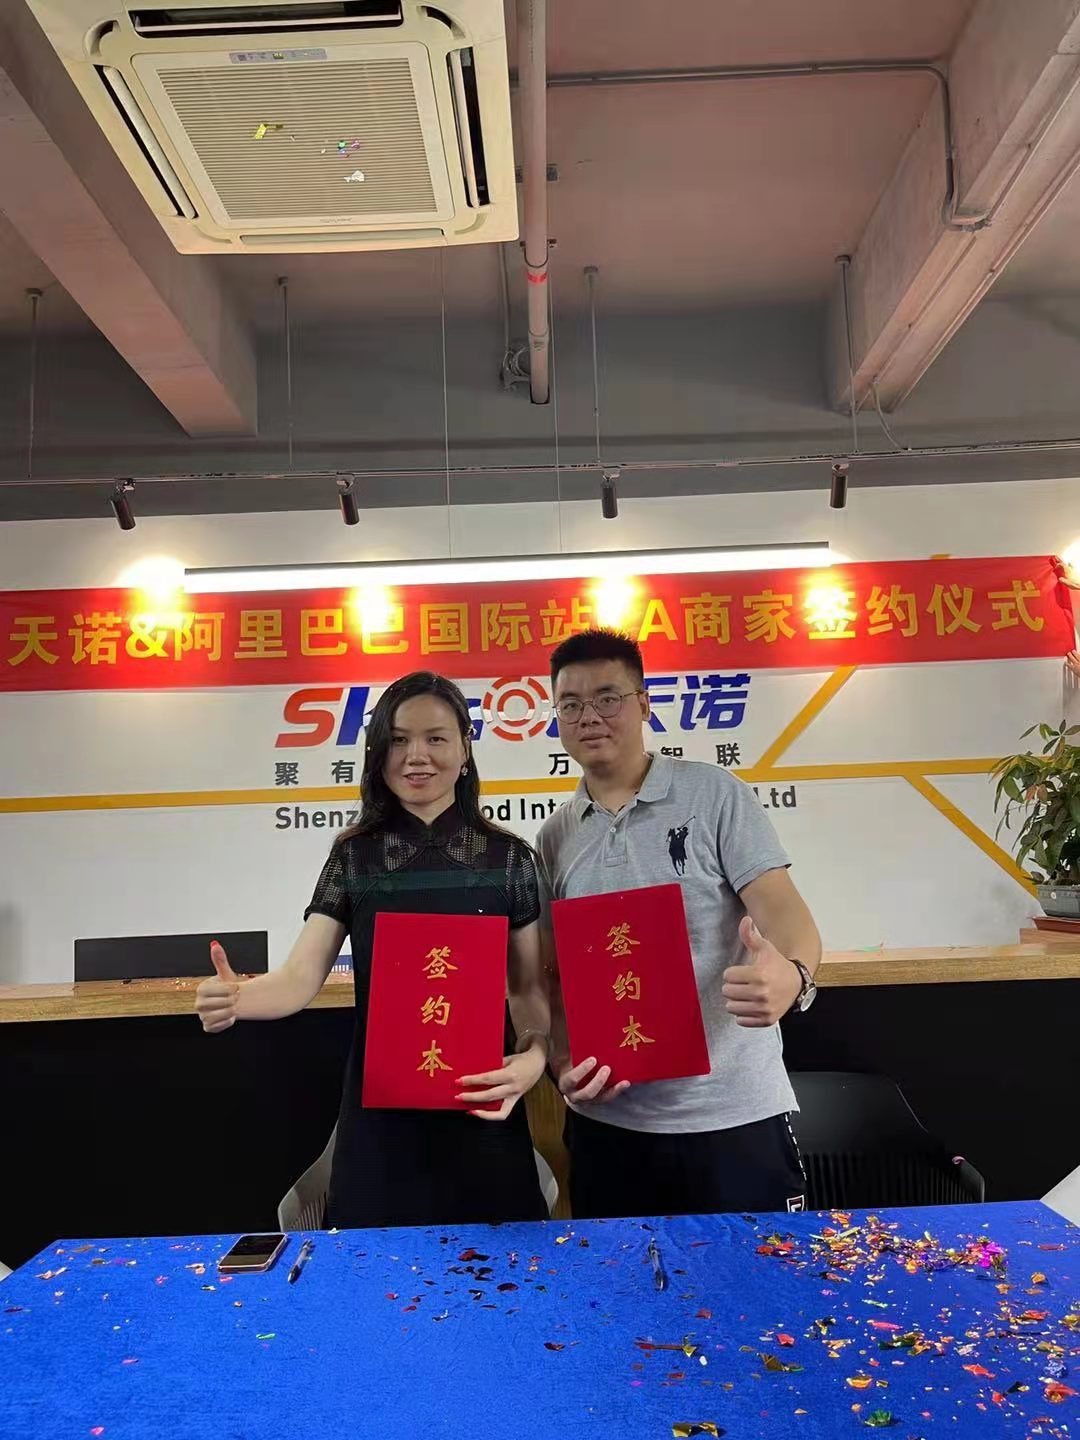 Skinod became Alibaba International Station A merchant signing ceremony